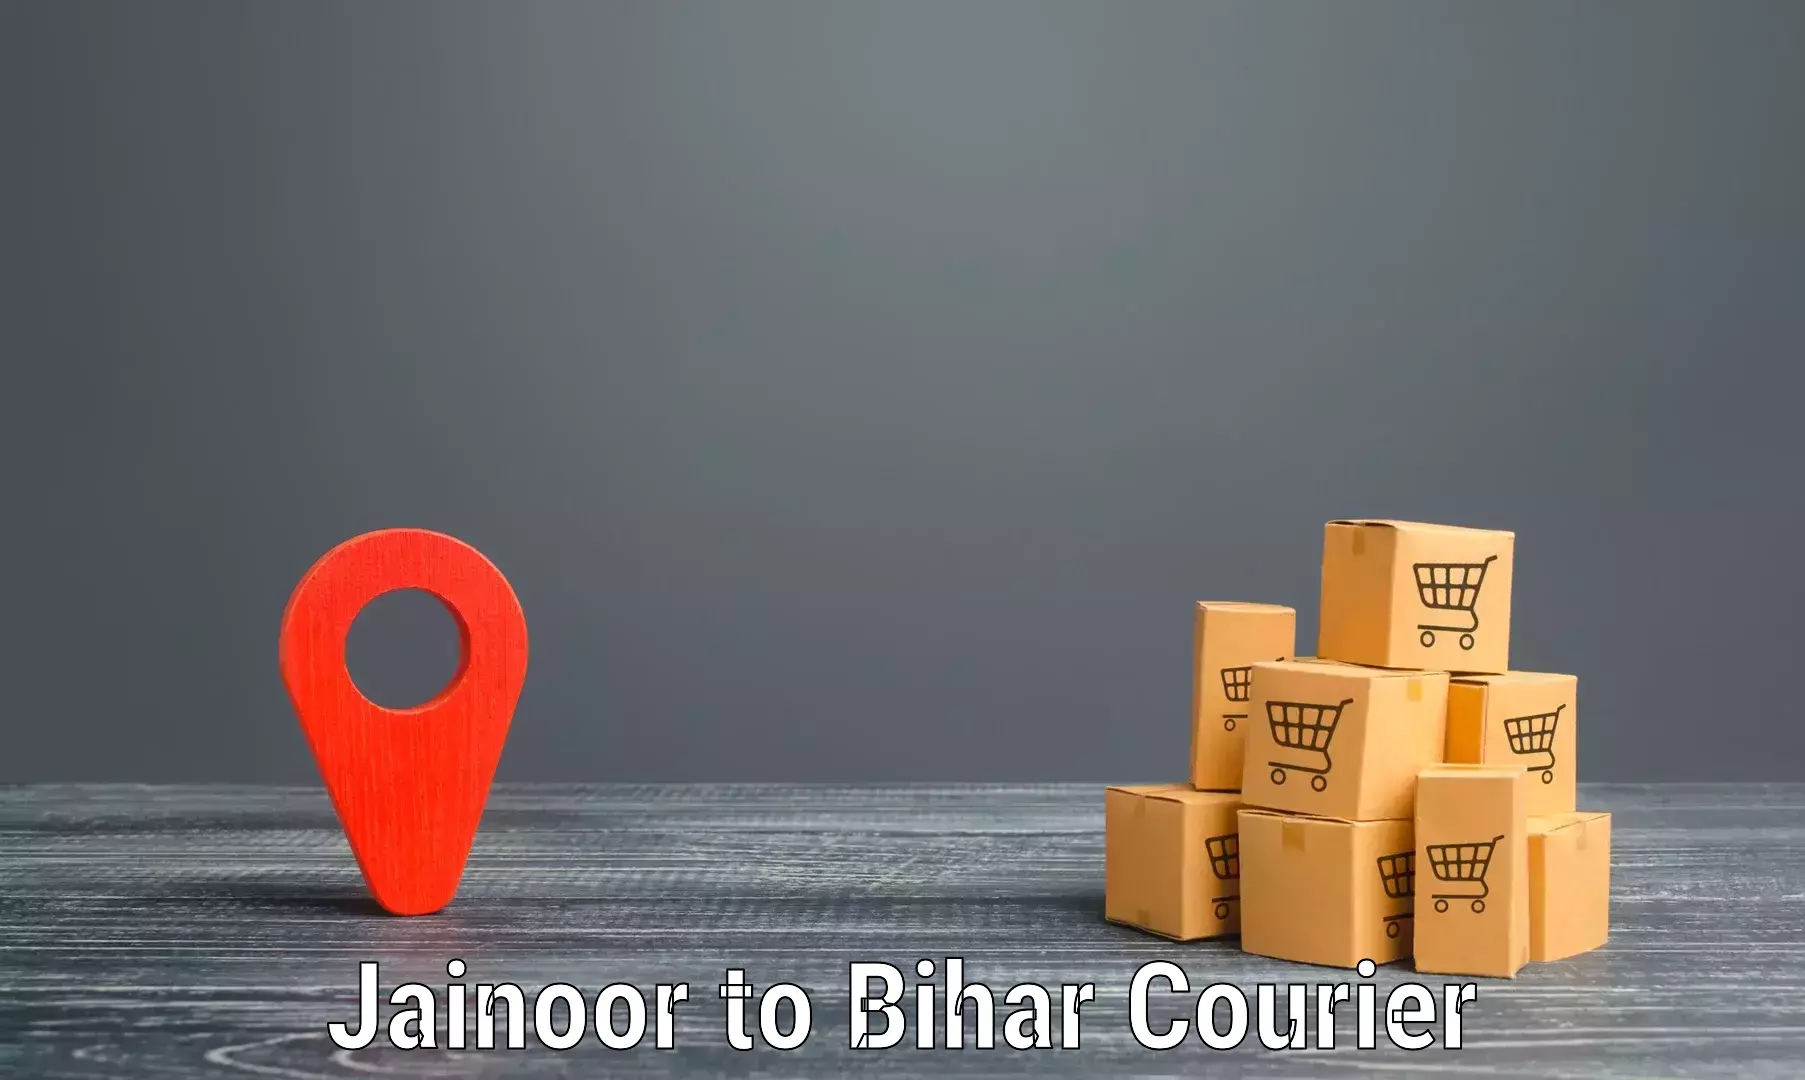 Efficient order fulfillment Jainoor to Kishanganj